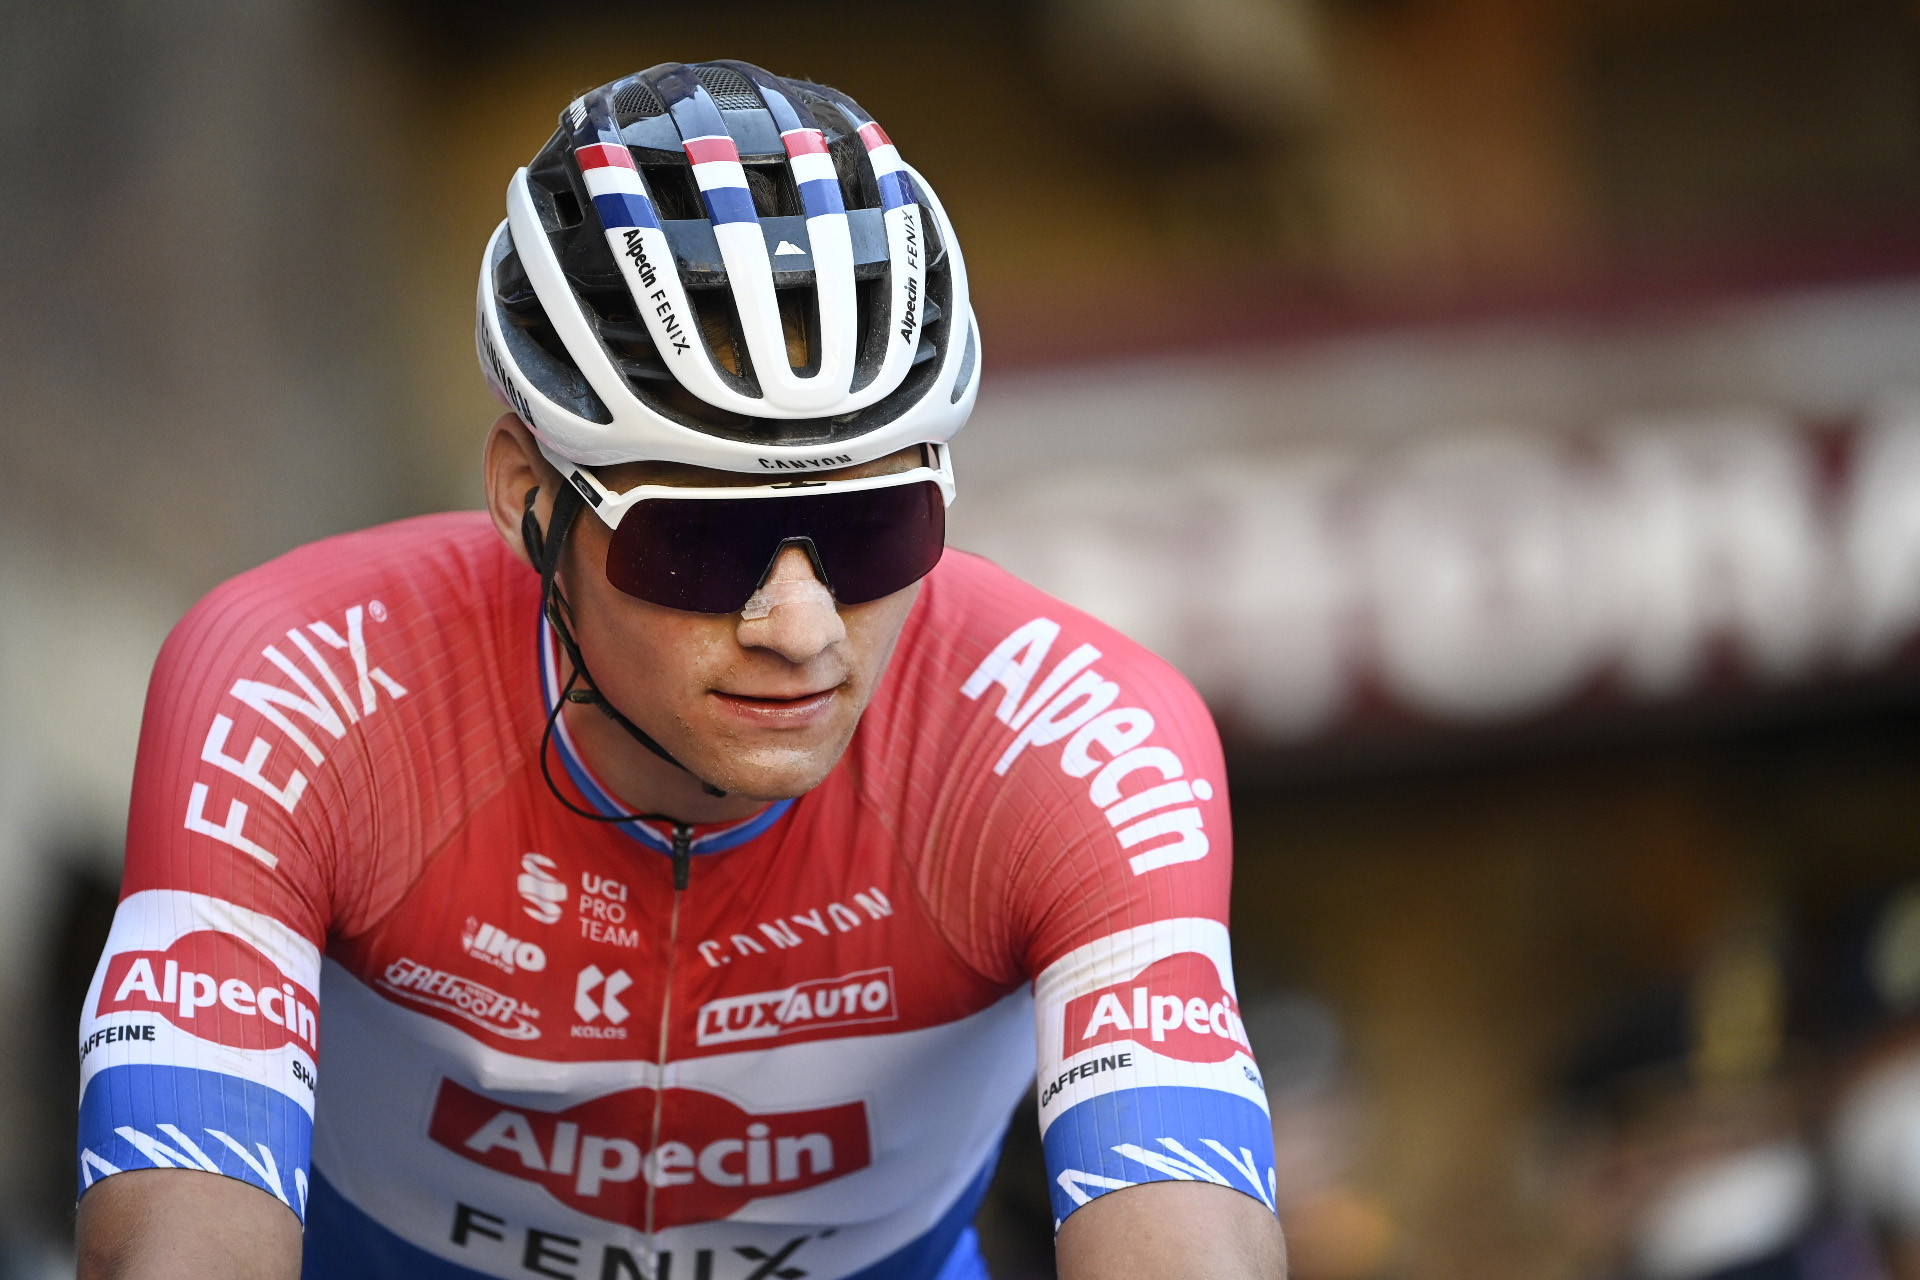 Mathieu van der Poel won his first stage of the 2021 Tirreno-Adriatico ©Getty Images